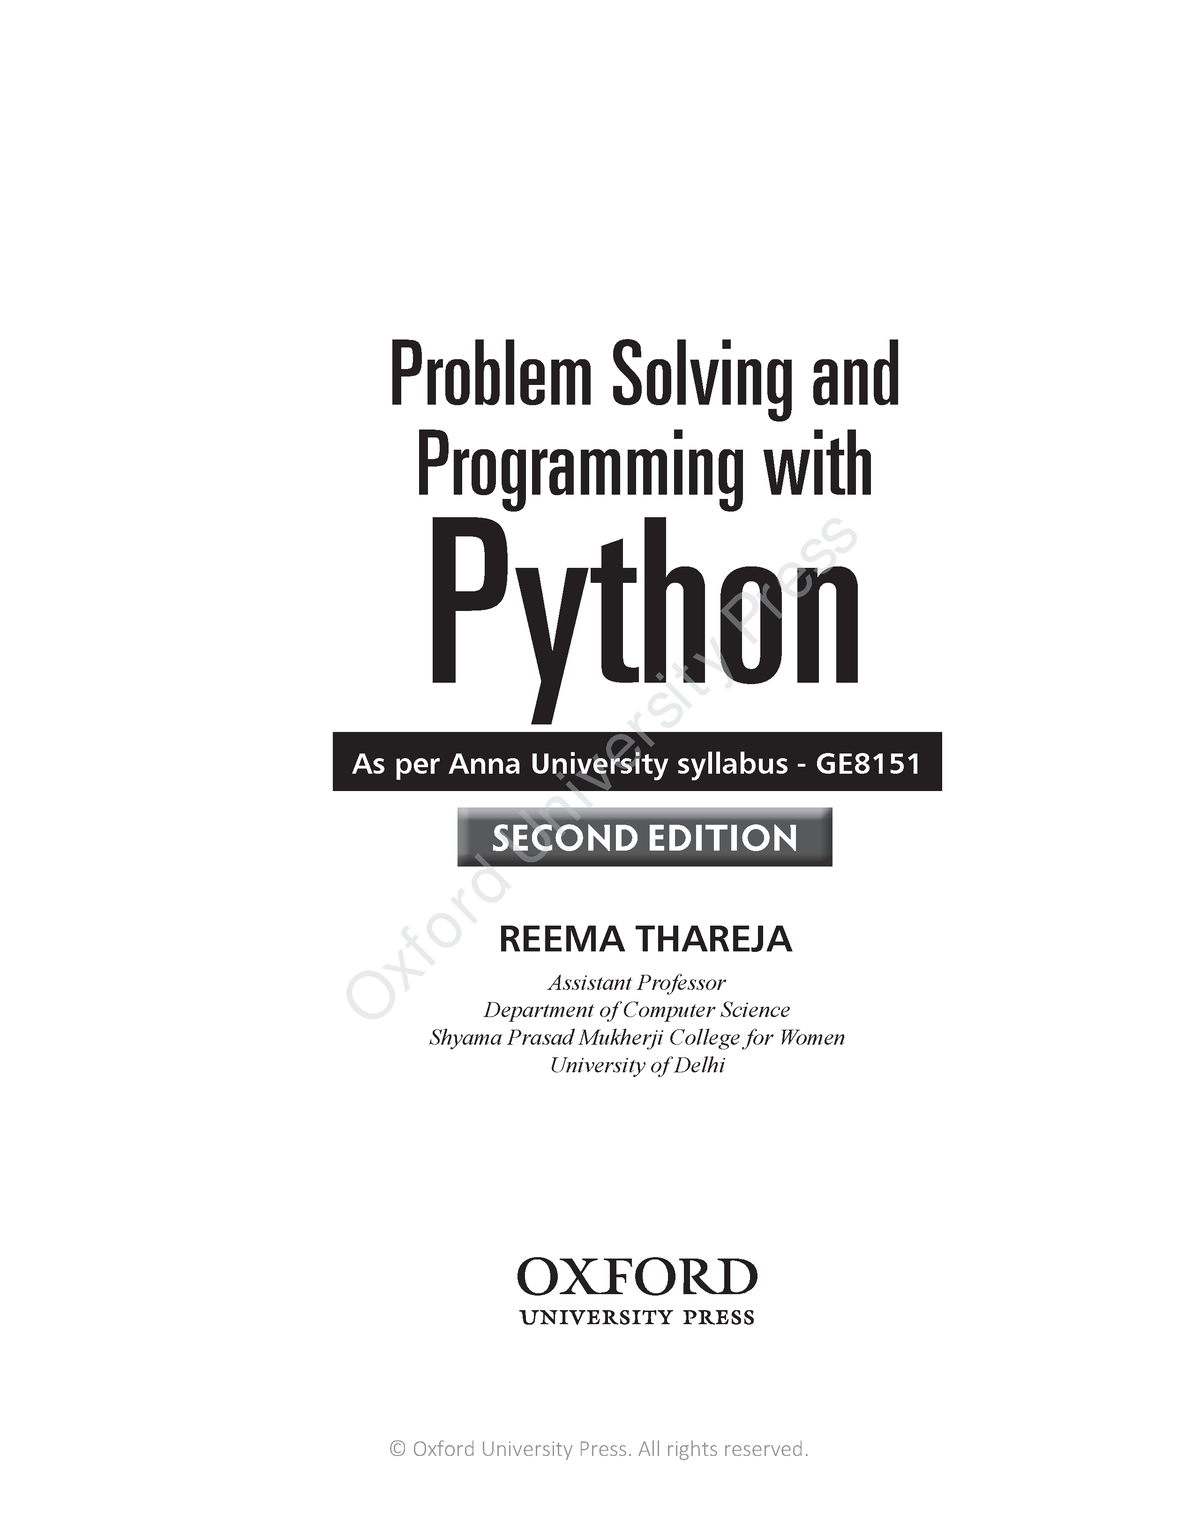 python programming using problem solving approach by reema thareja